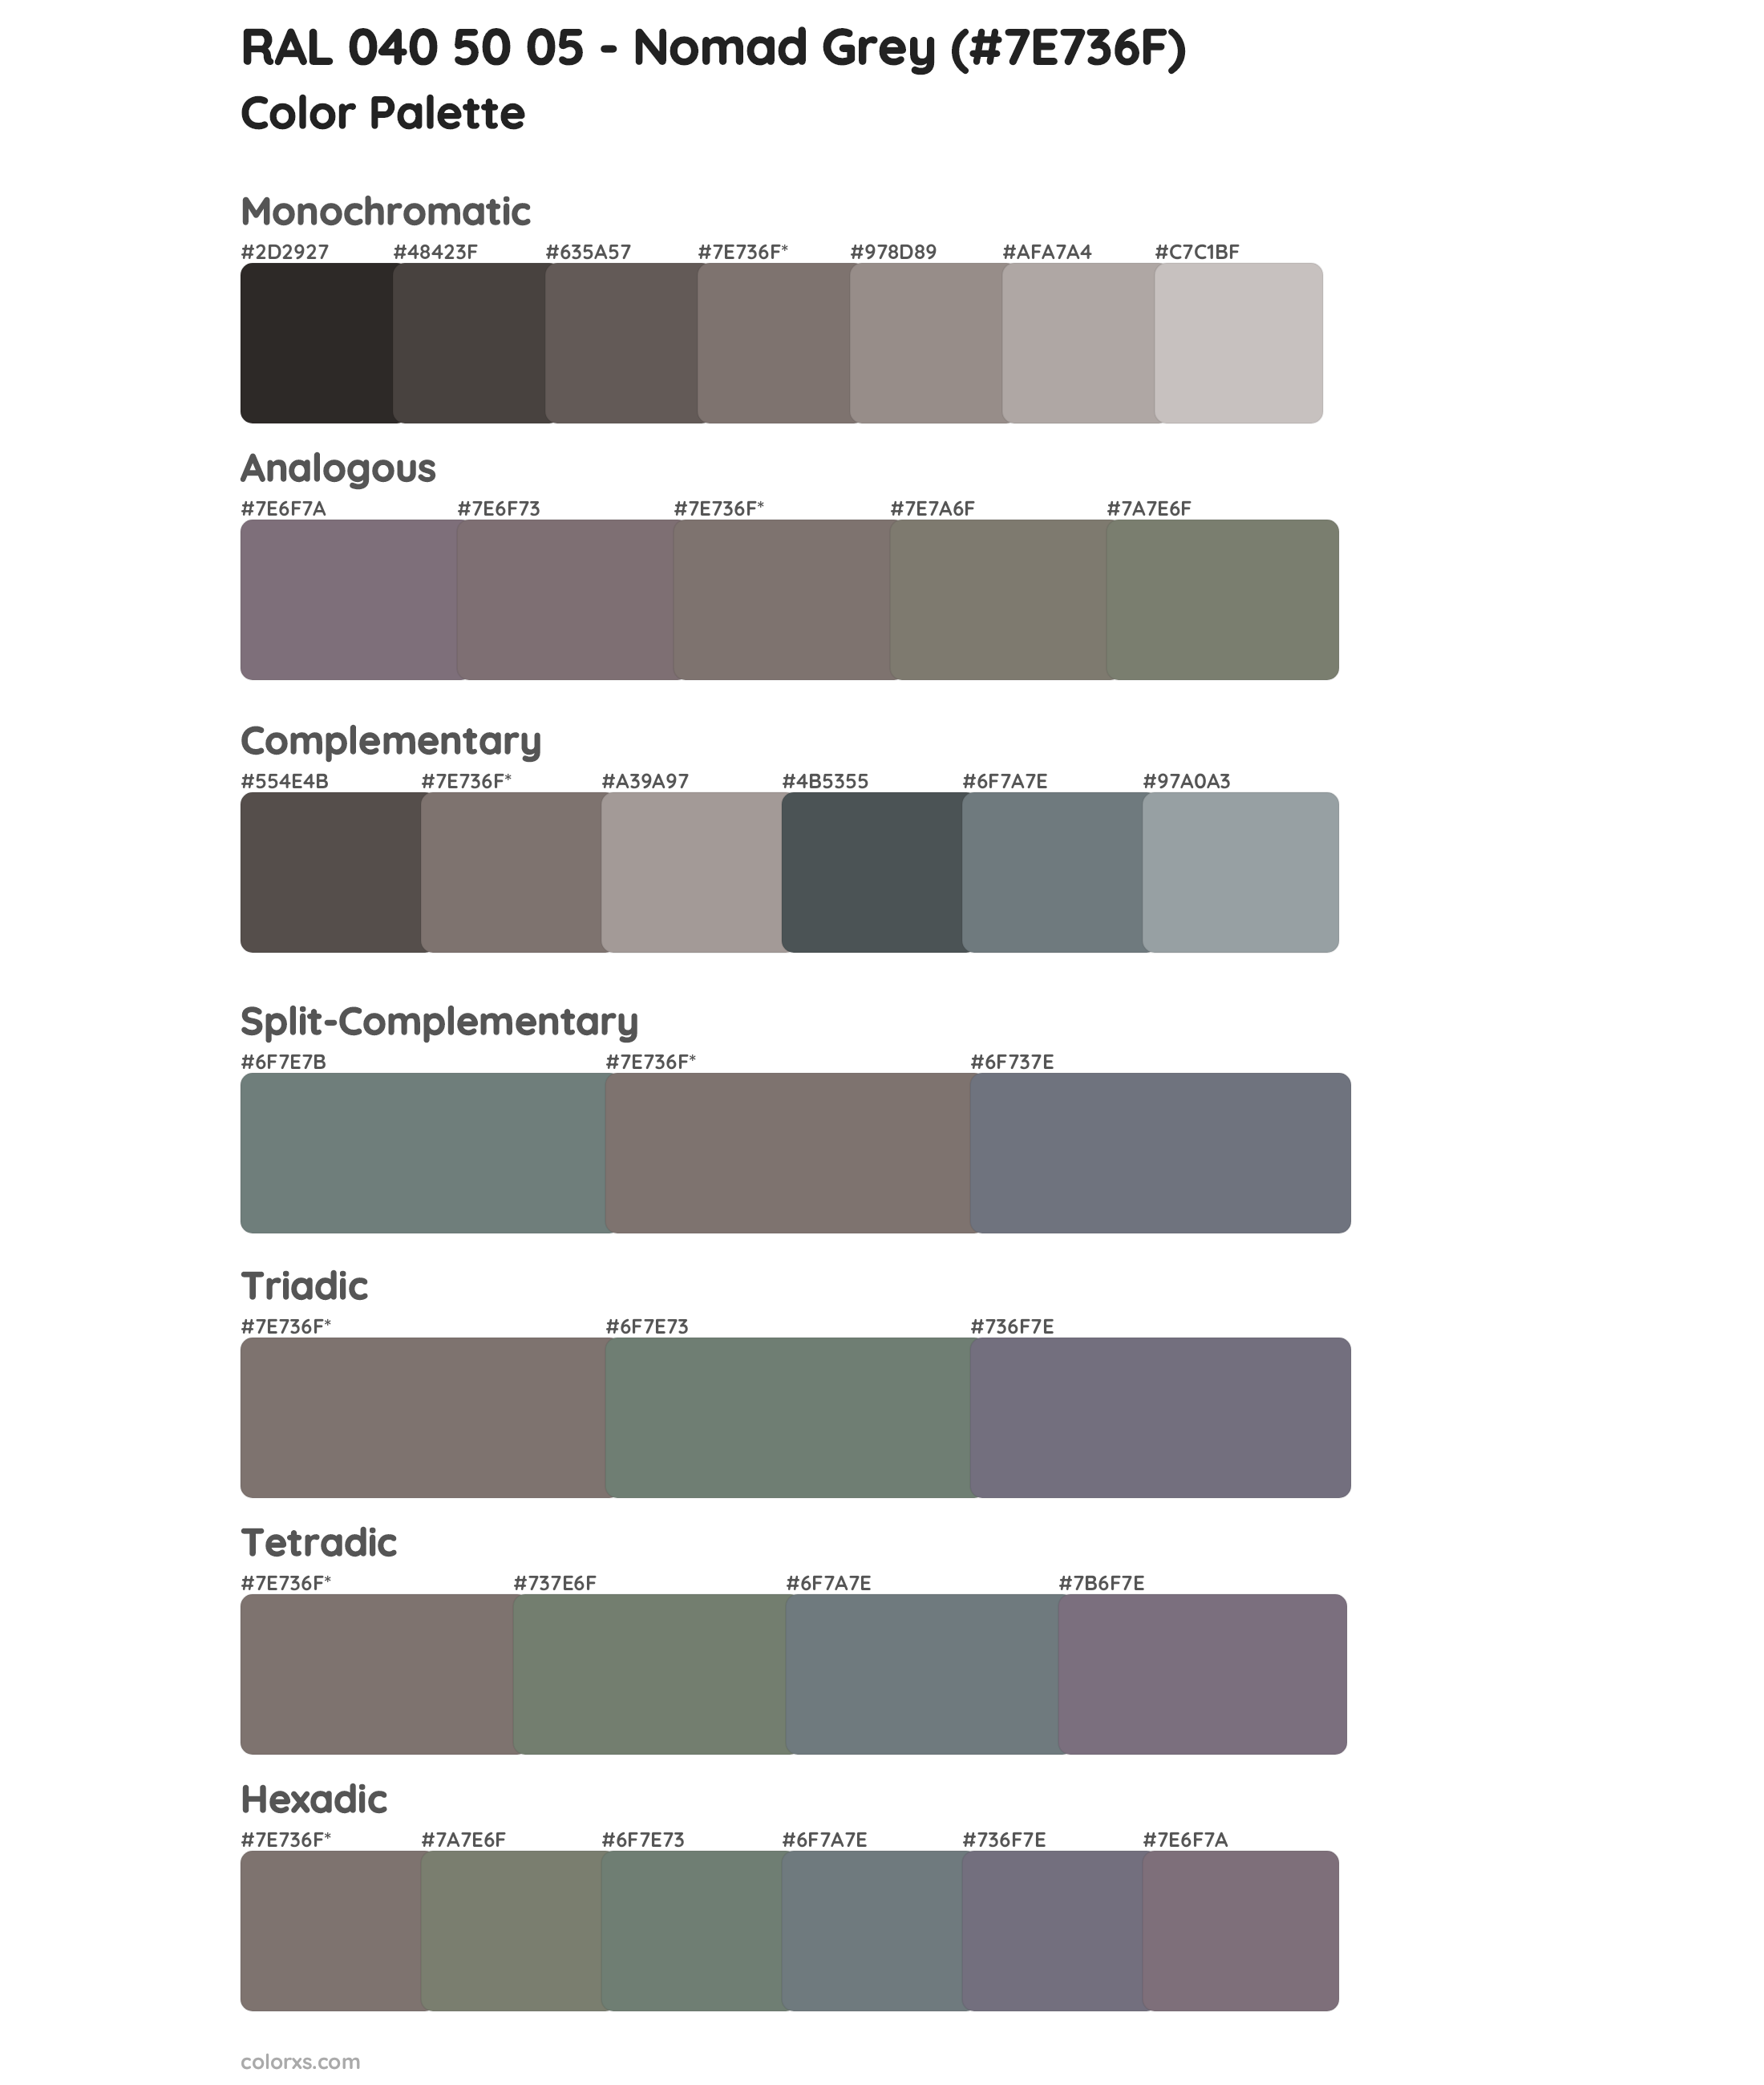 RAL 040 50 05 - Nomad Grey Color Scheme Palettes